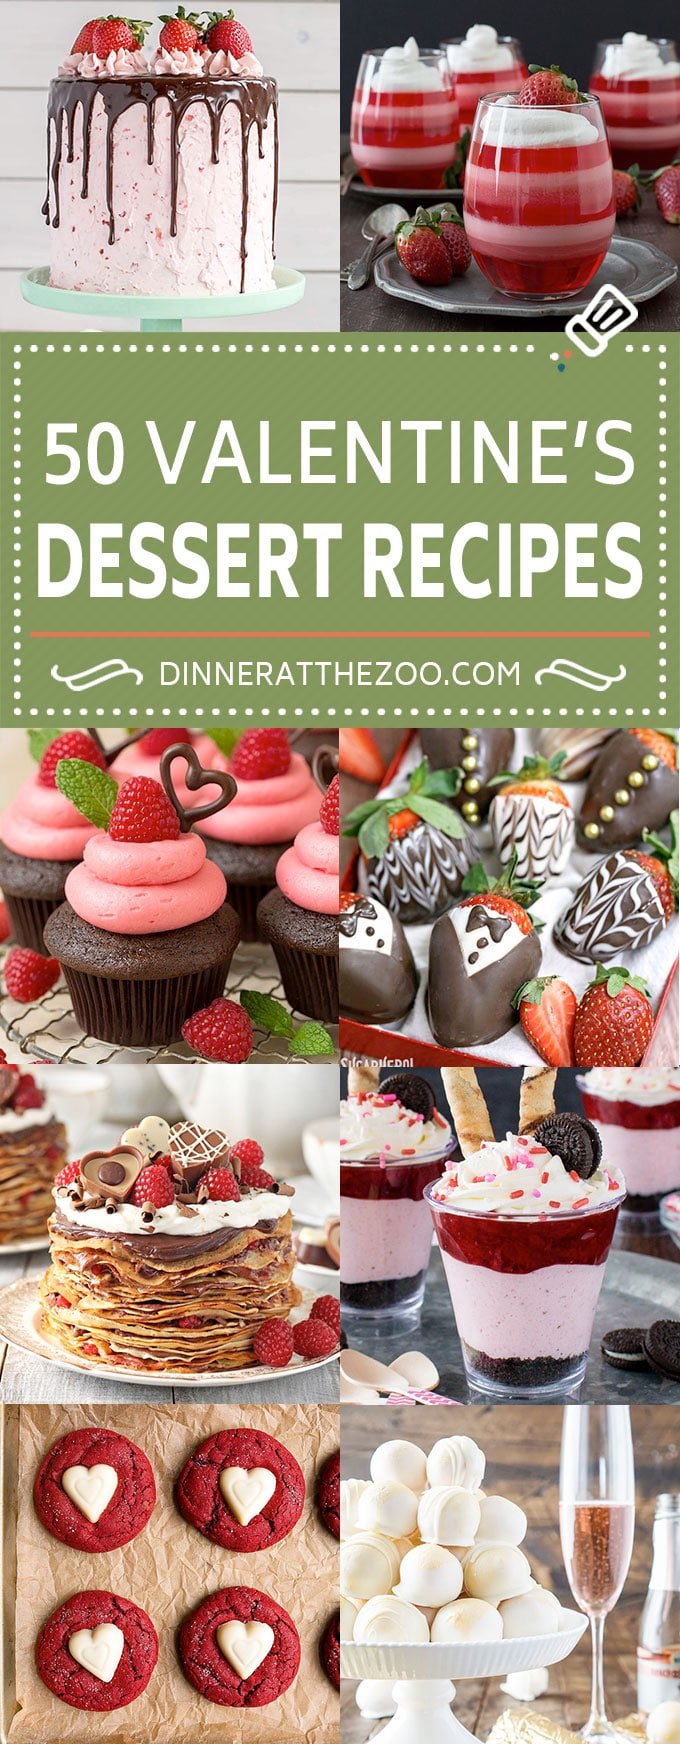 50 Valentine's Day Dessert Recipes | Chocolate Desserts | Valentine's Day Sweets #valentinesday #dessert #cakes #candy #dinneratthezoo